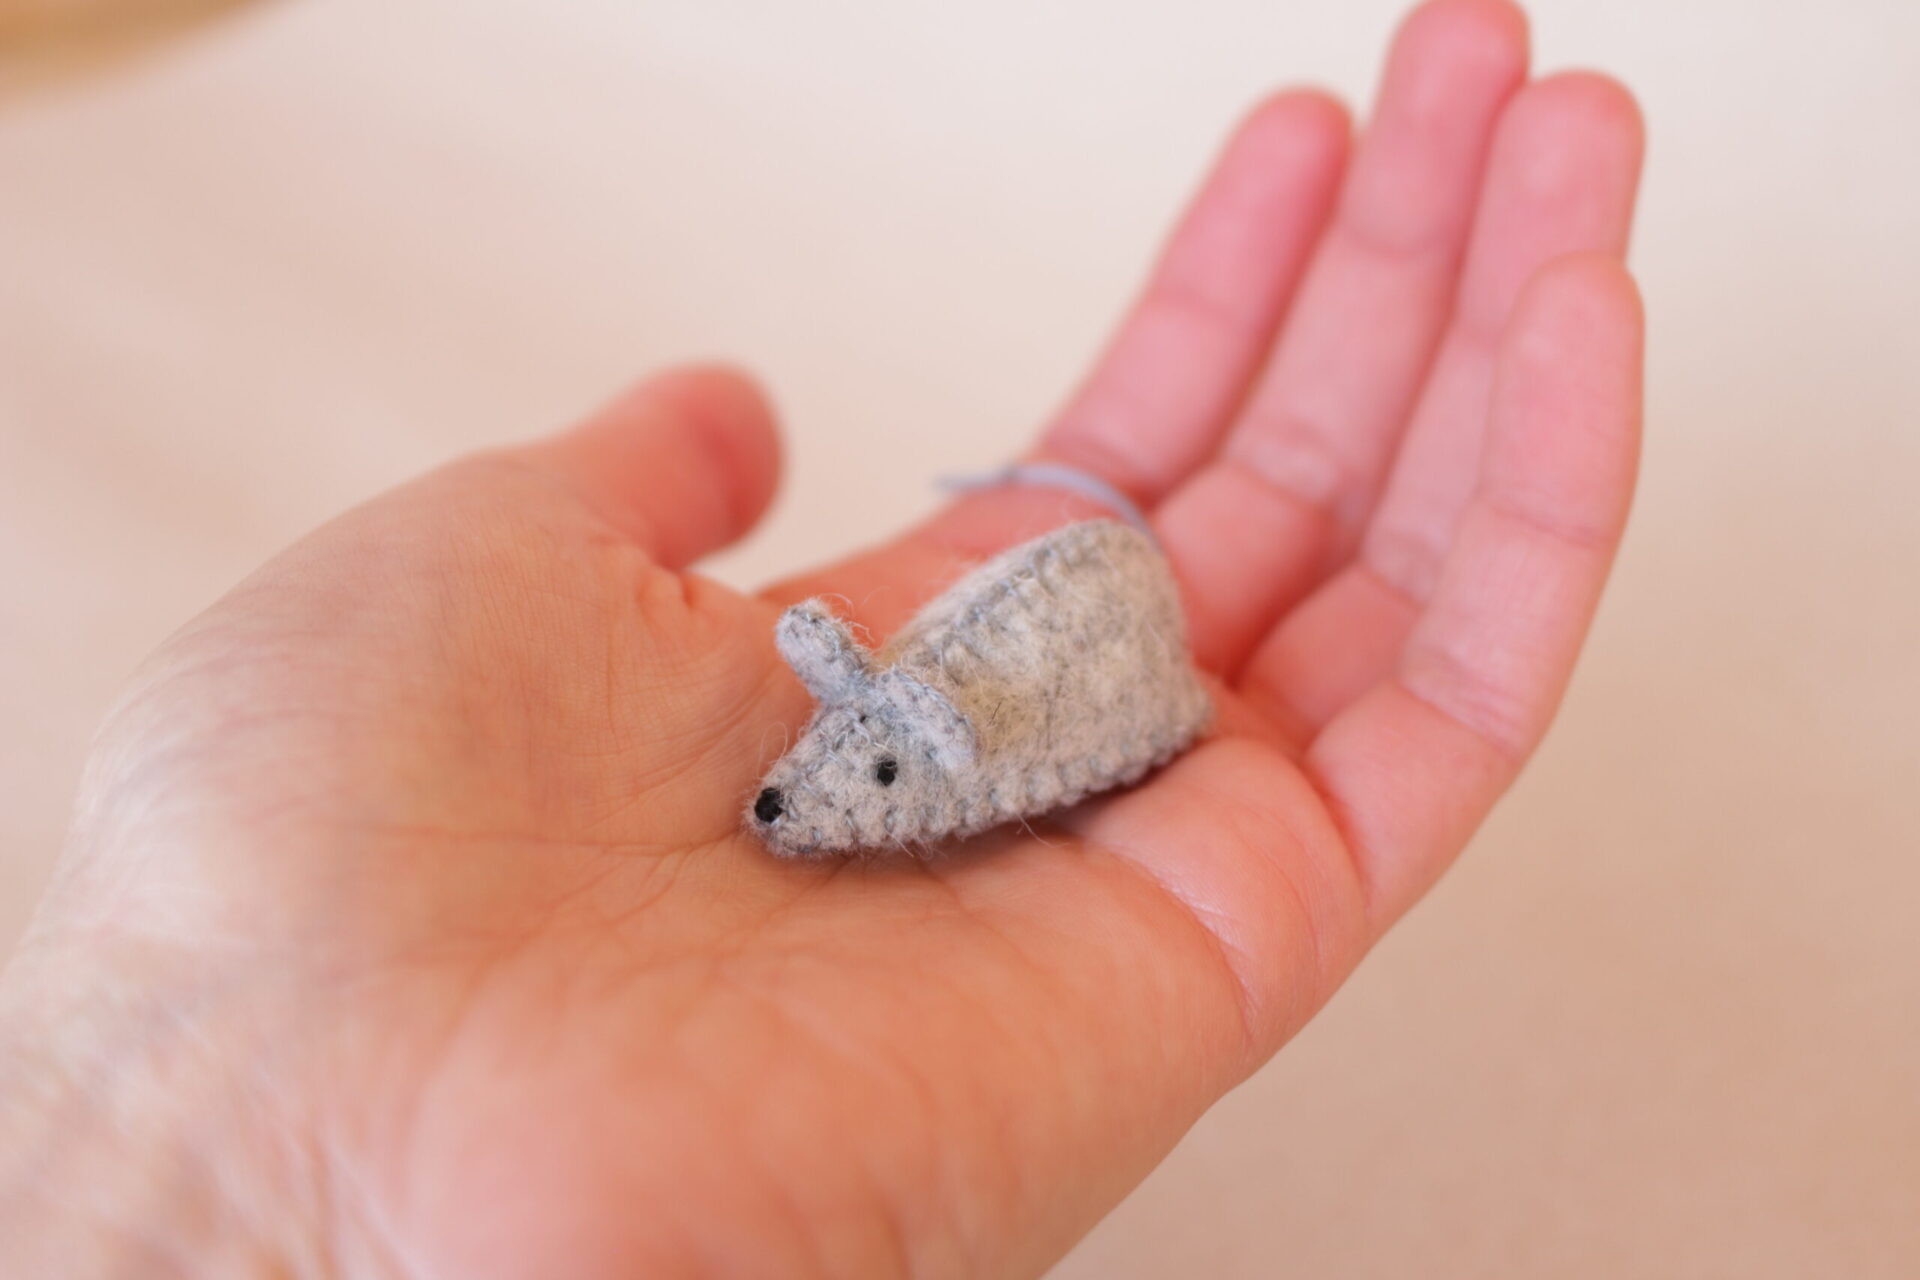 Small felt mouse